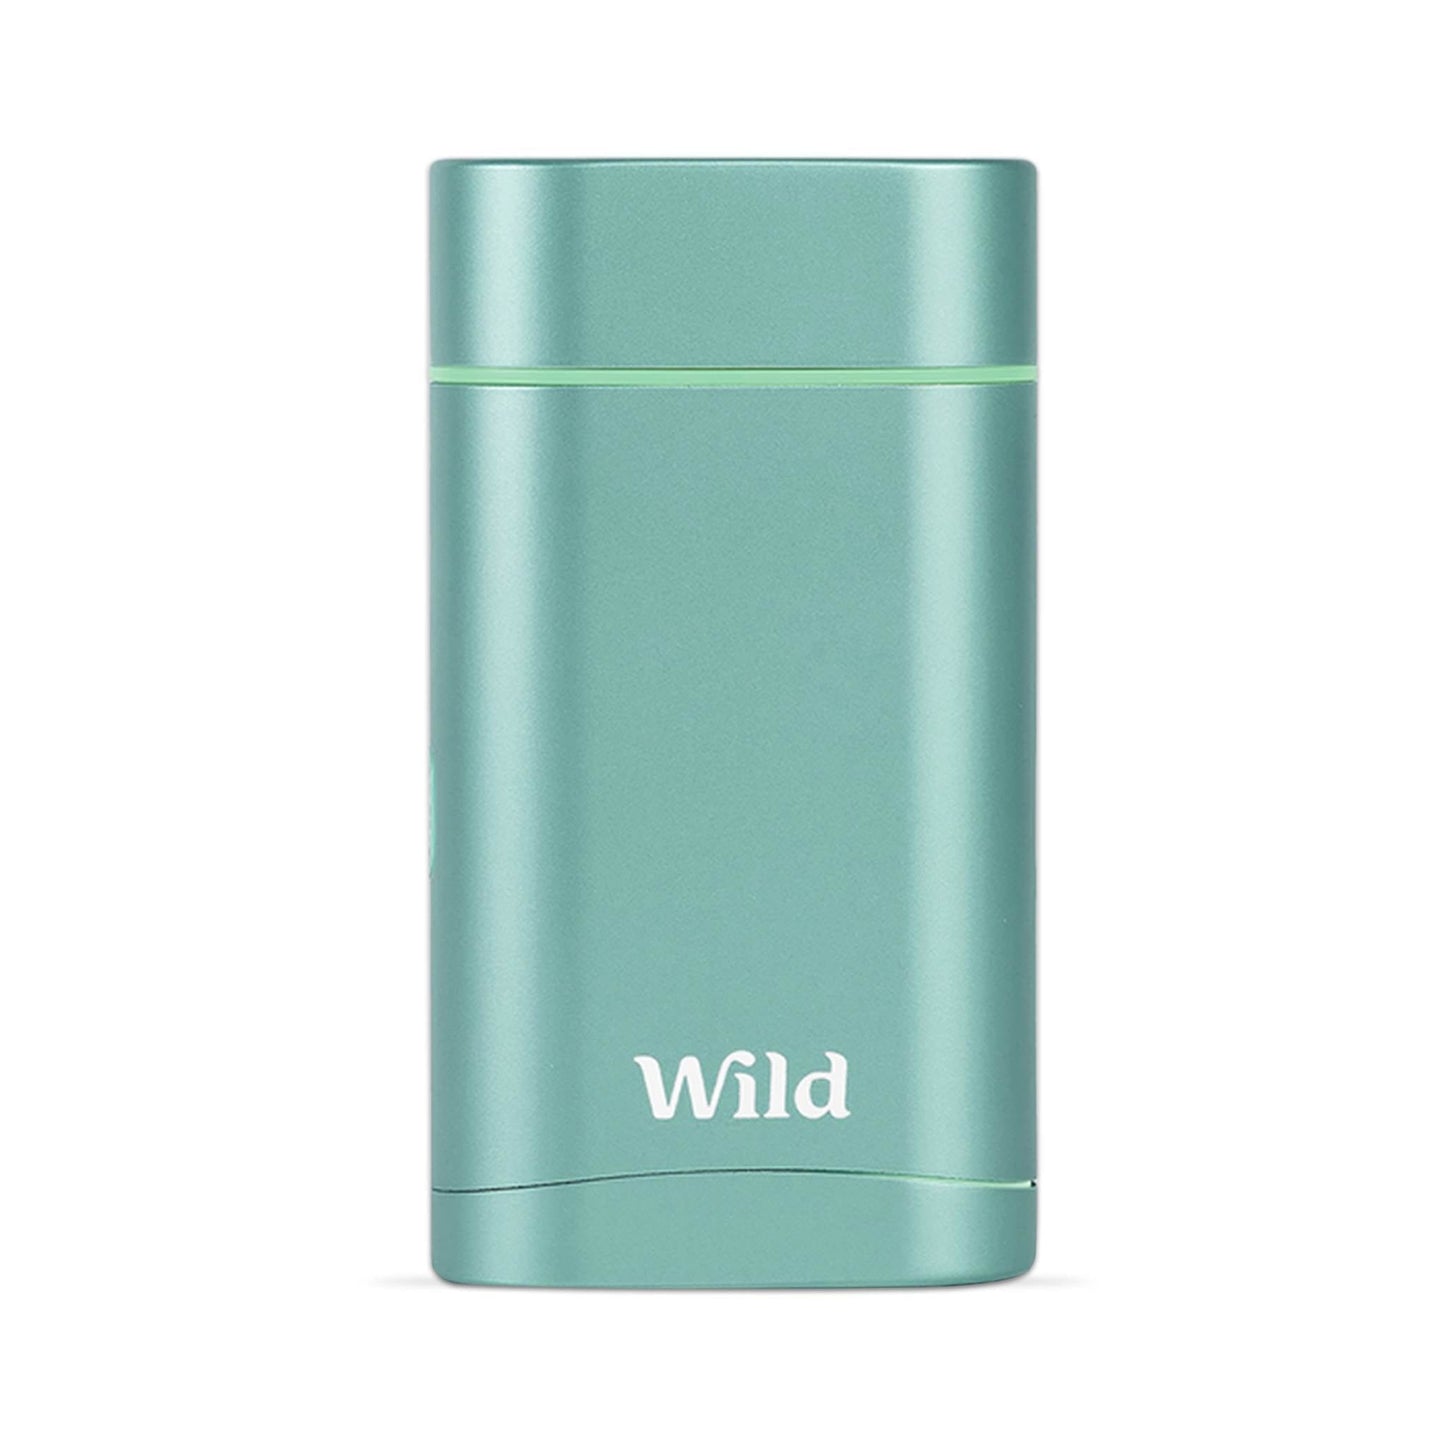 Wild Deodorant Wild Aqua Case and Fresh Cotton & Sea Salt Natural Deodorant Starter Pack